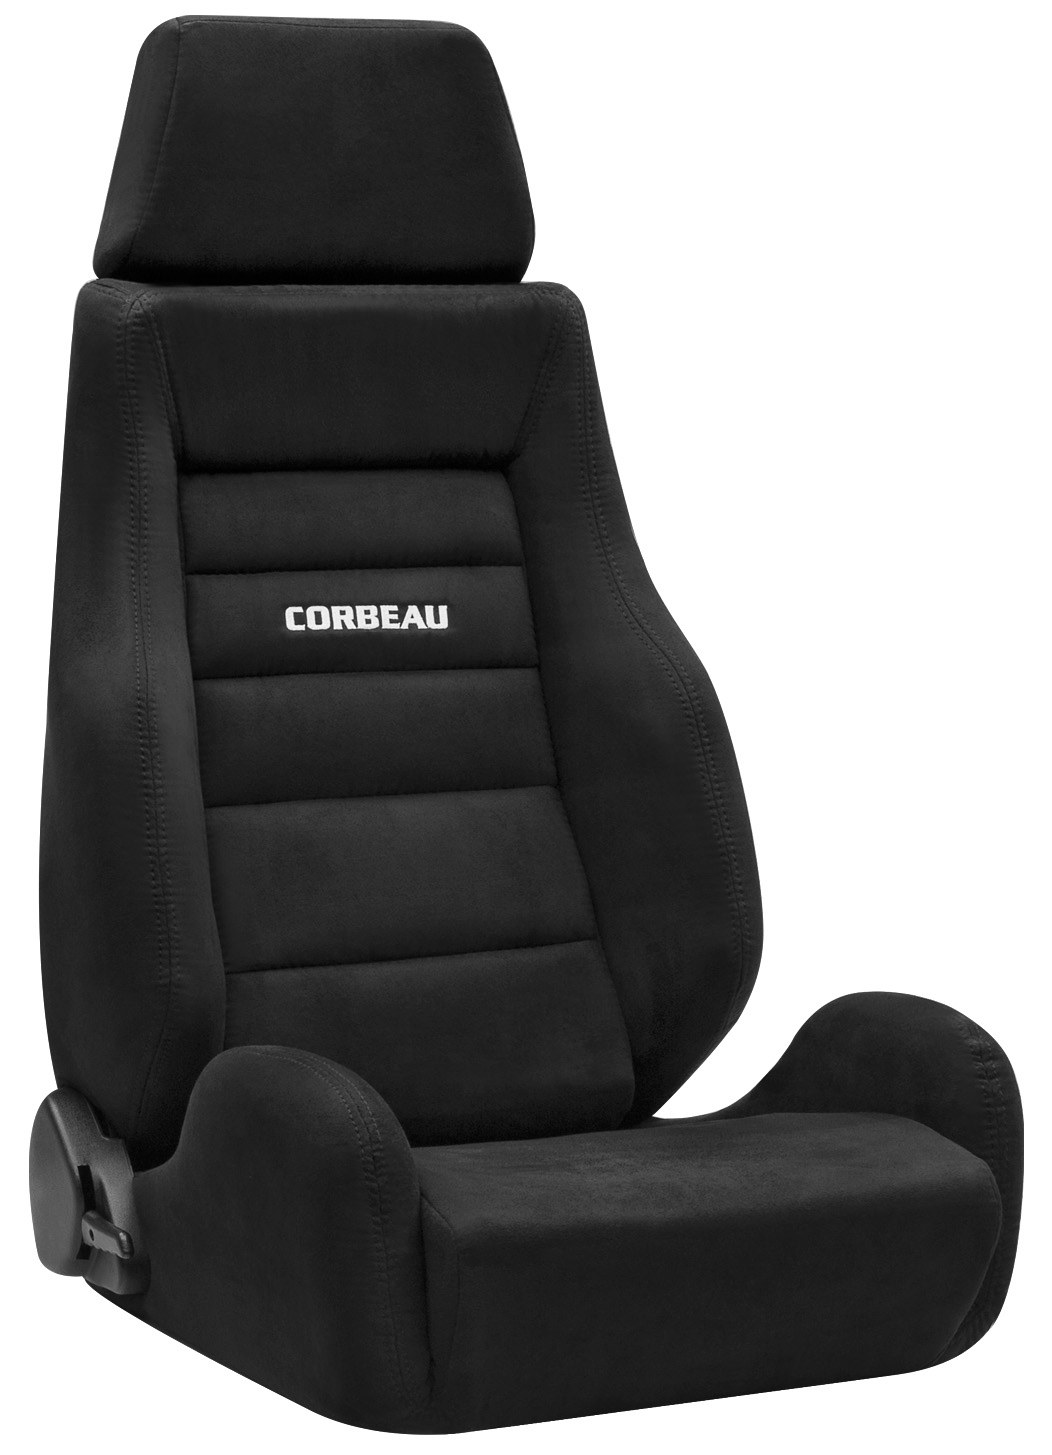 Corbeau GTSII Racing Seat, Black Microsuede, S20301PR